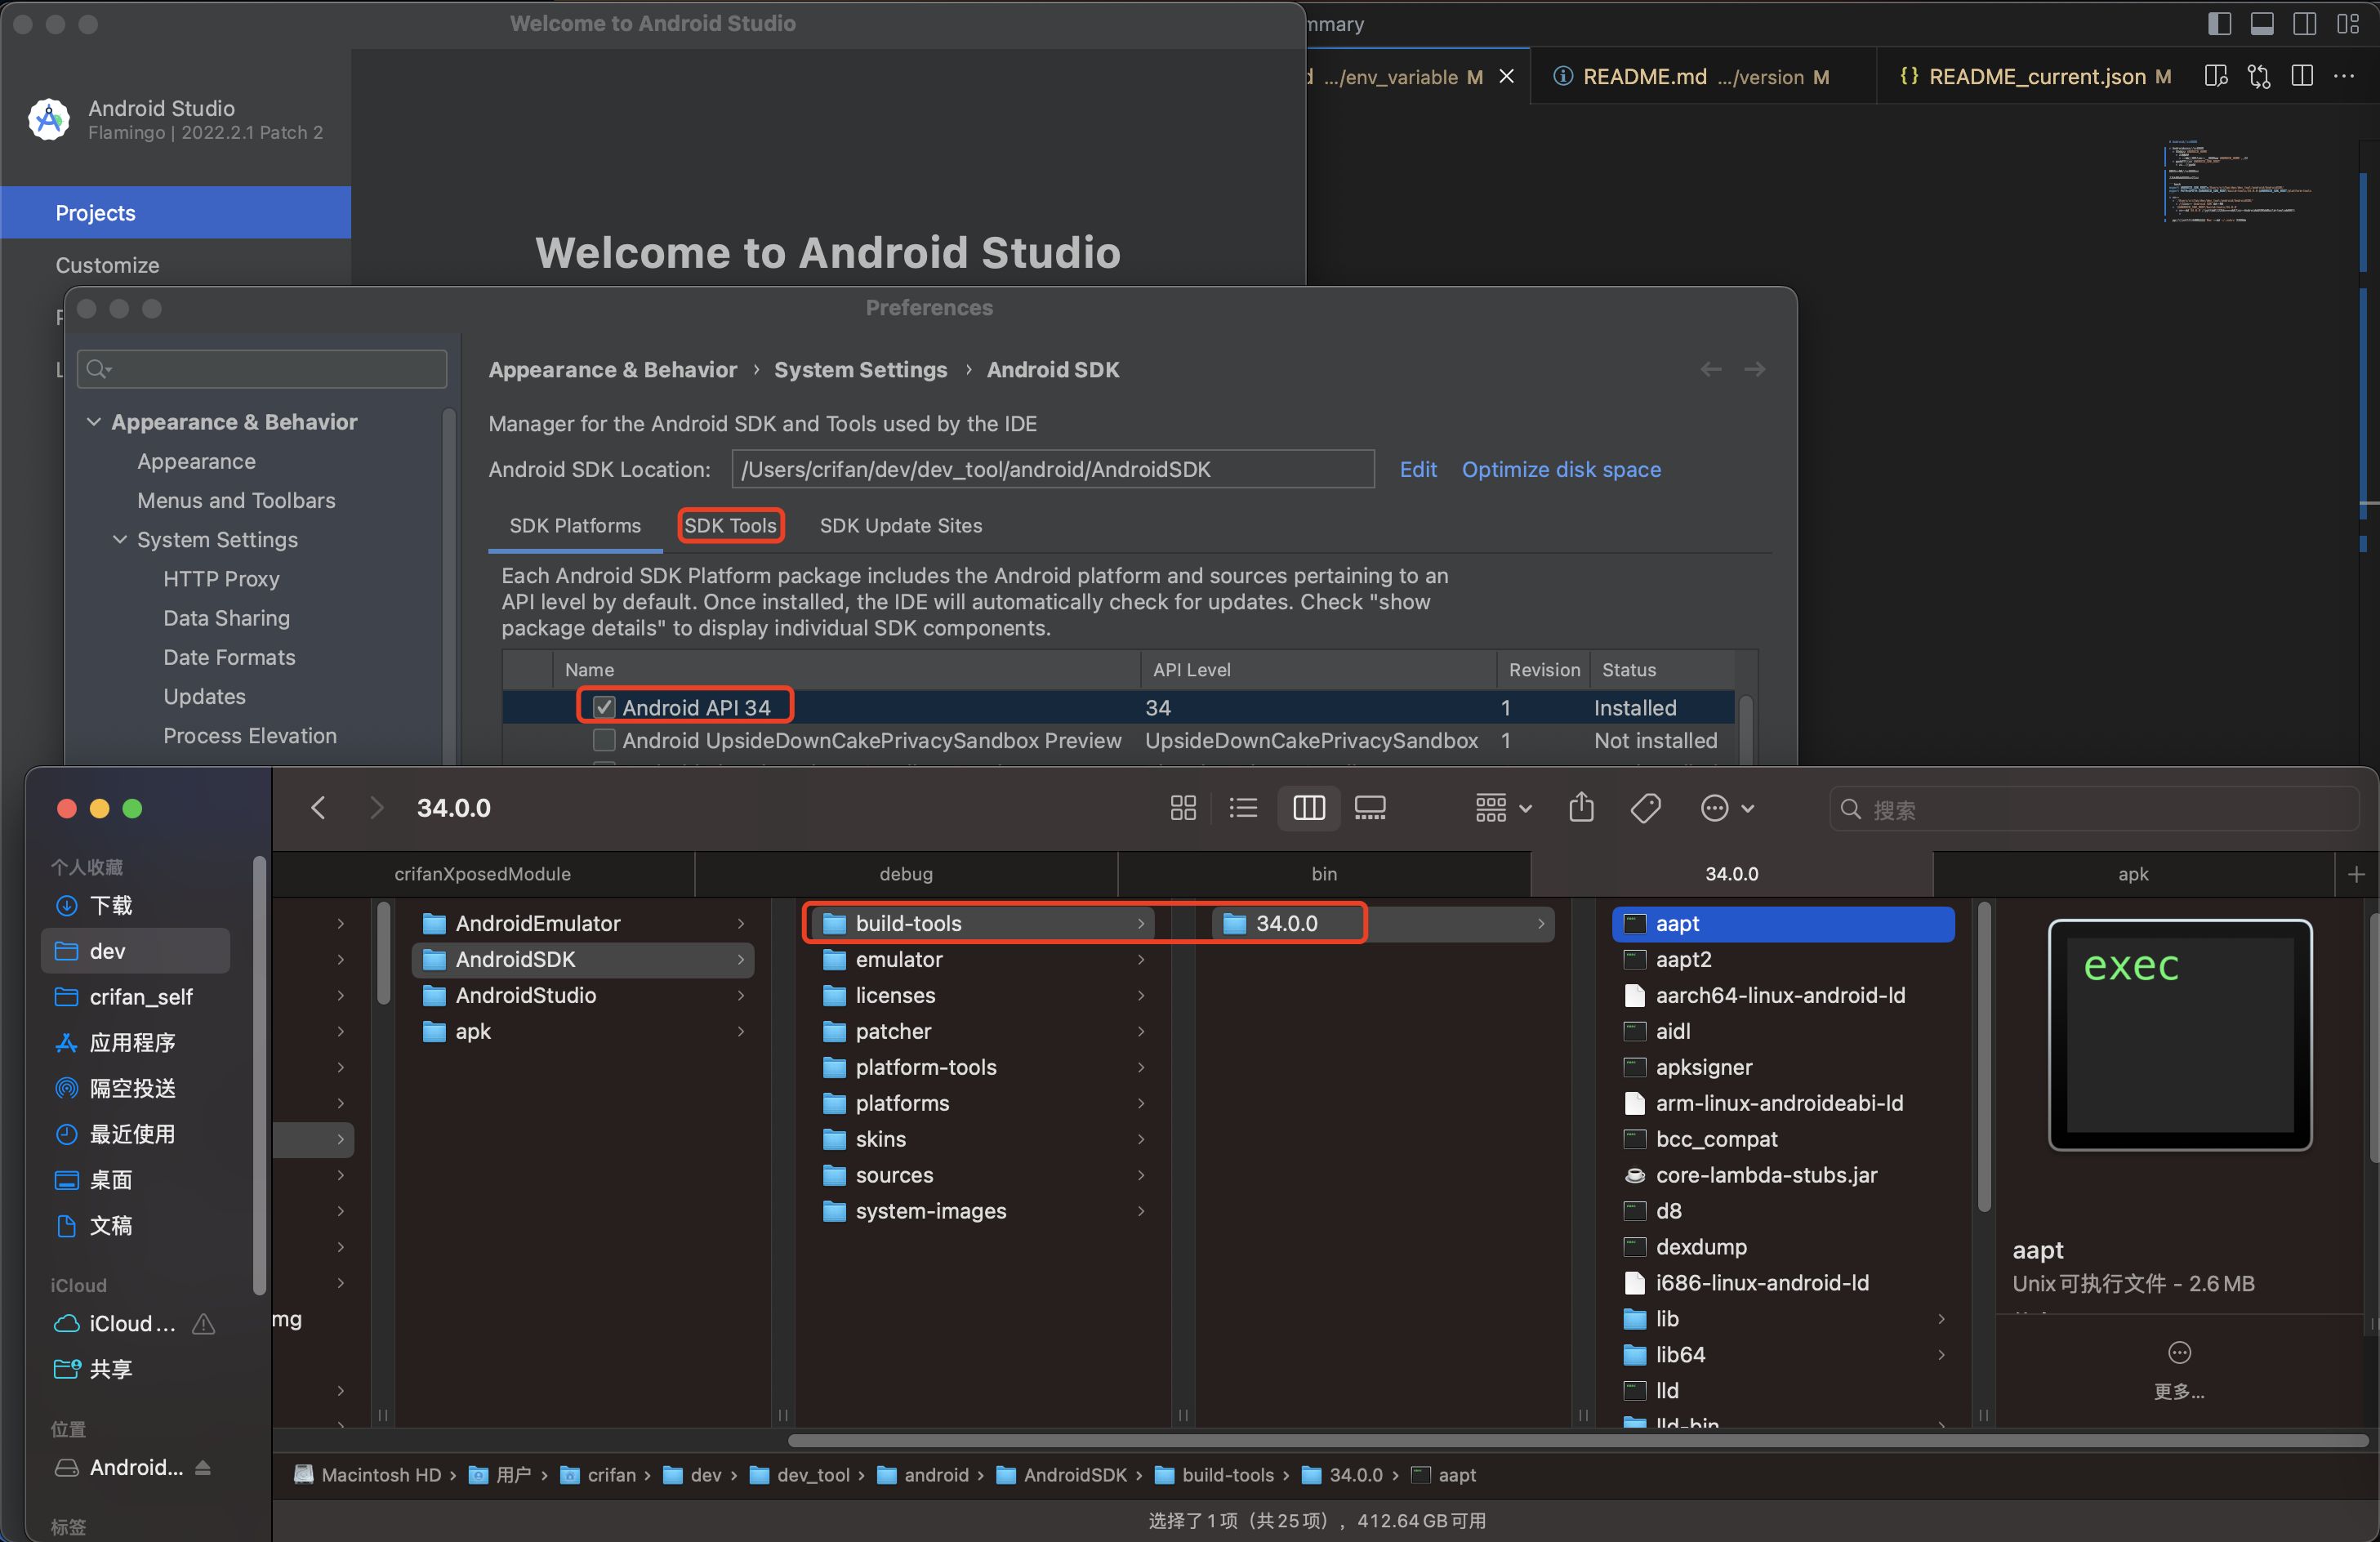 android_studio_build_tools_34